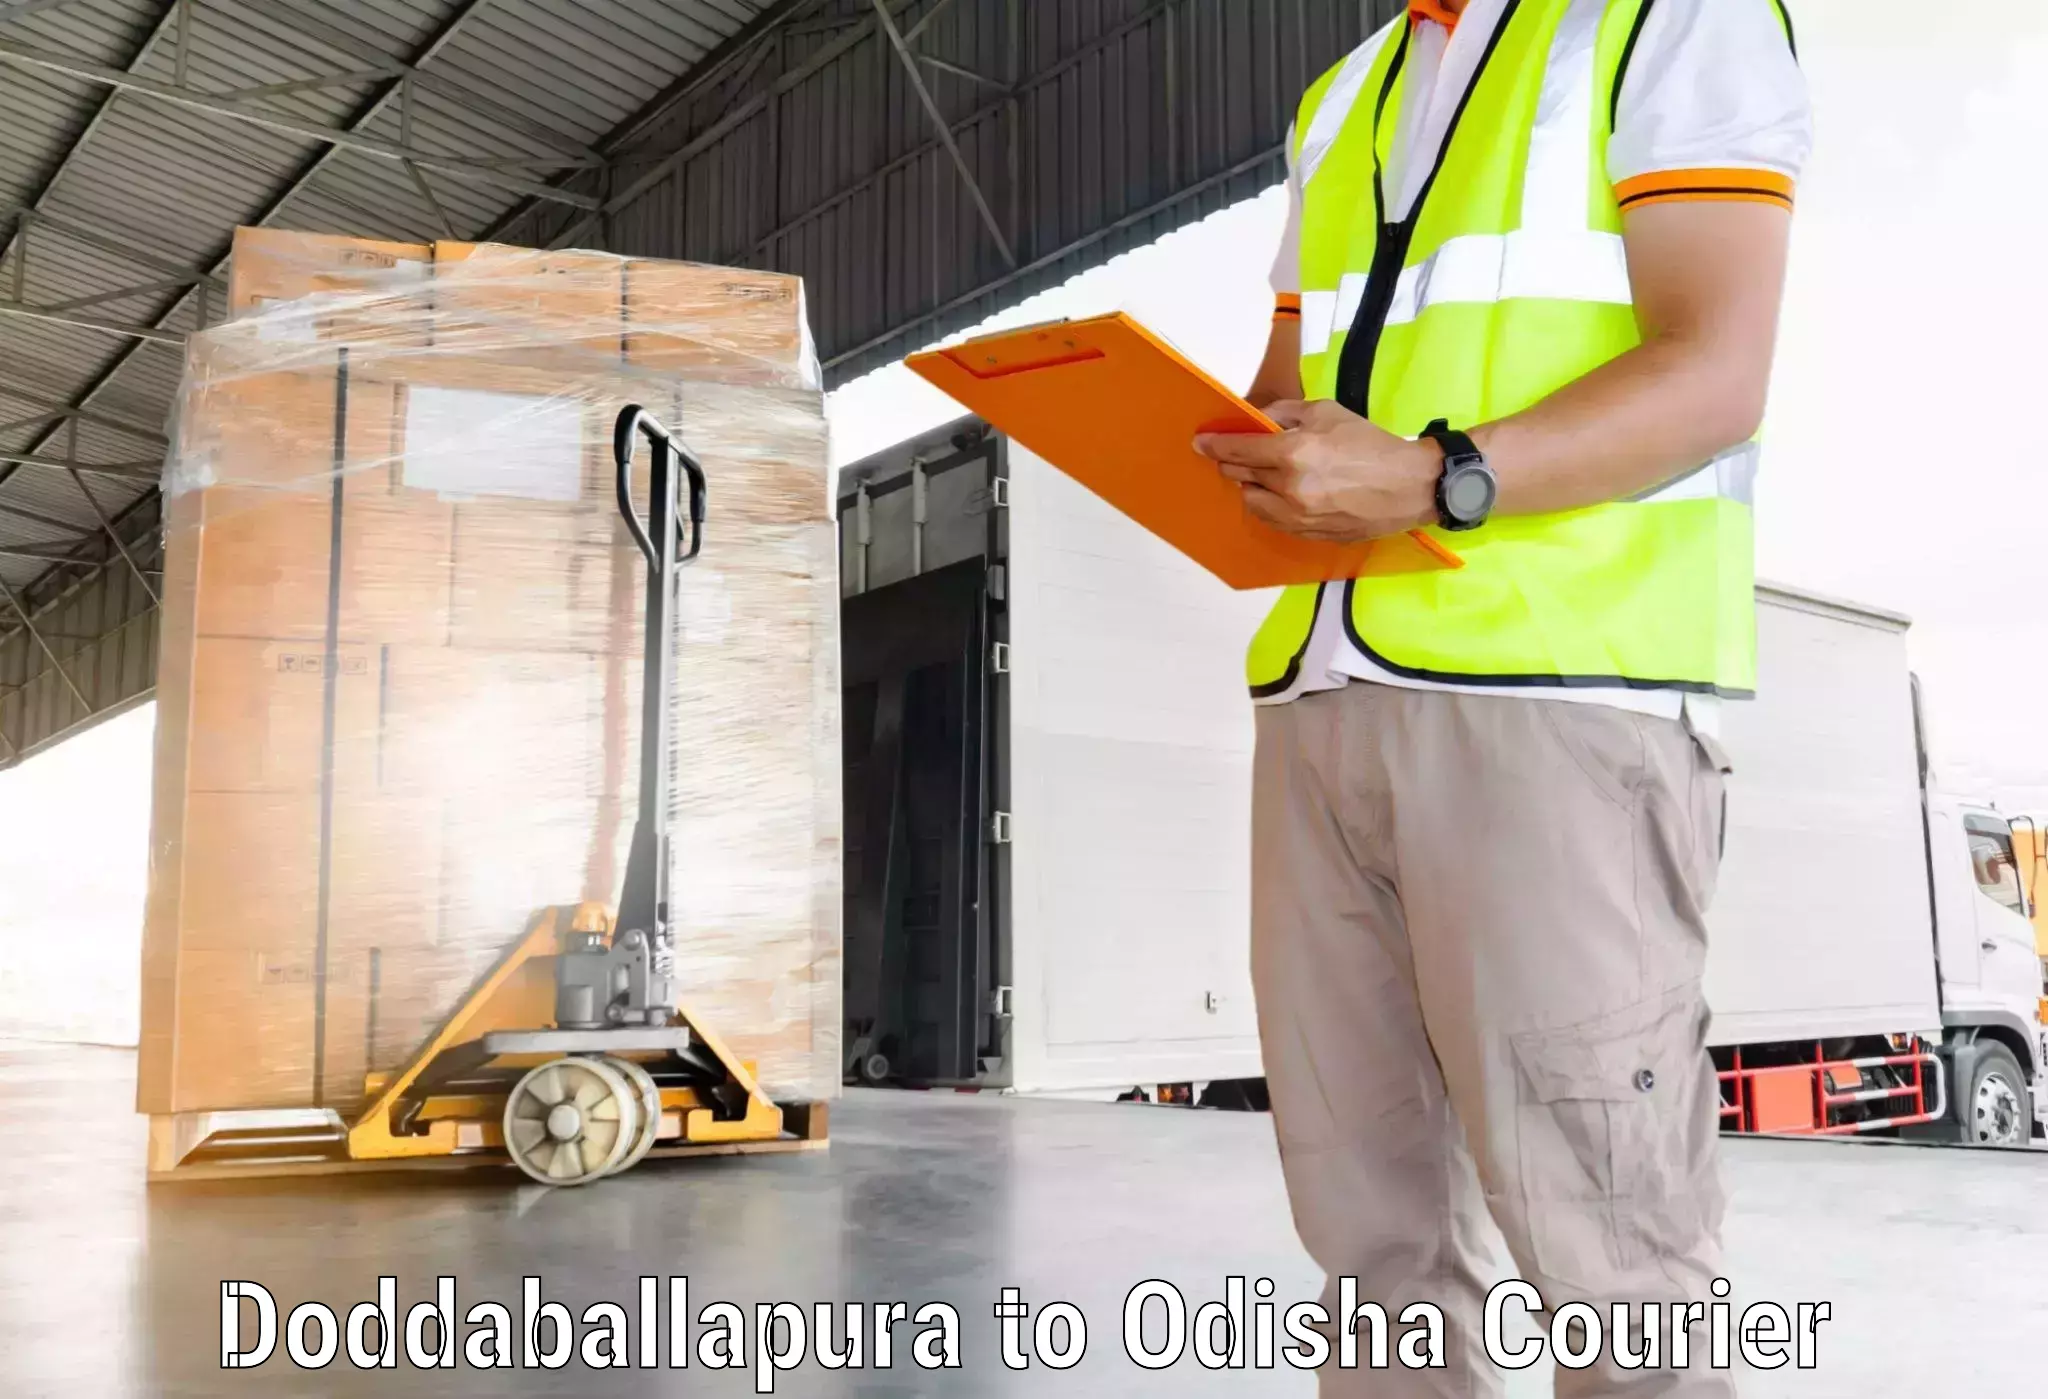 Flexible delivery schedules Doddaballapura to Kotapad